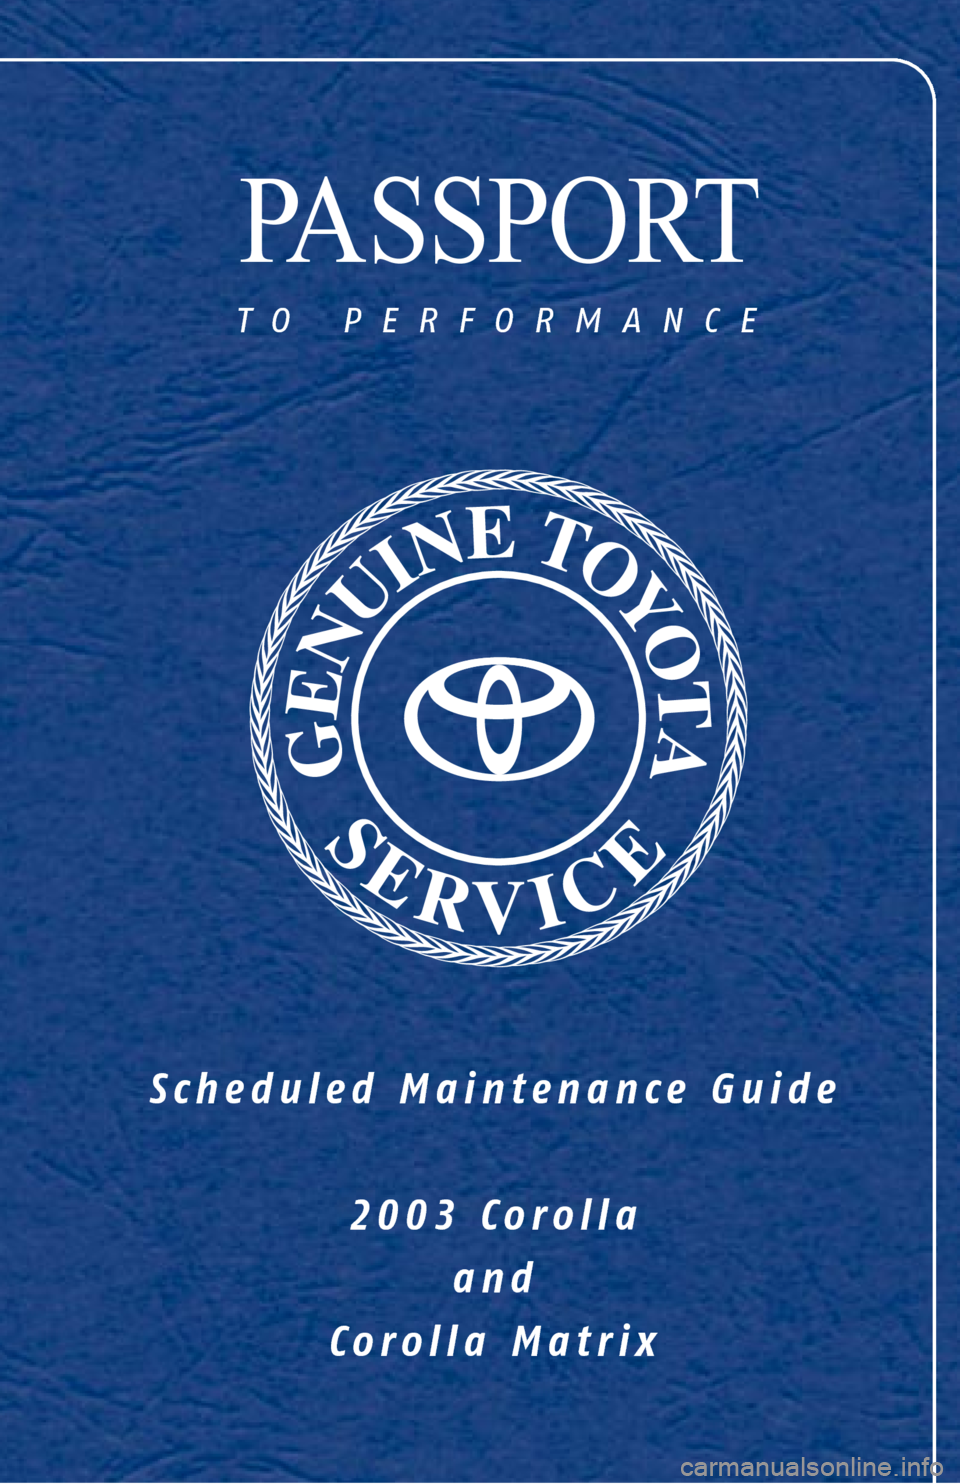 TOYOTA COROLLA 2003 E120 / 9.G Scheduled Maintenance Guide PASSPORT
to performance
Scheduled Maintenance Guide
2003 Corolla
and
Corolla Matrix 